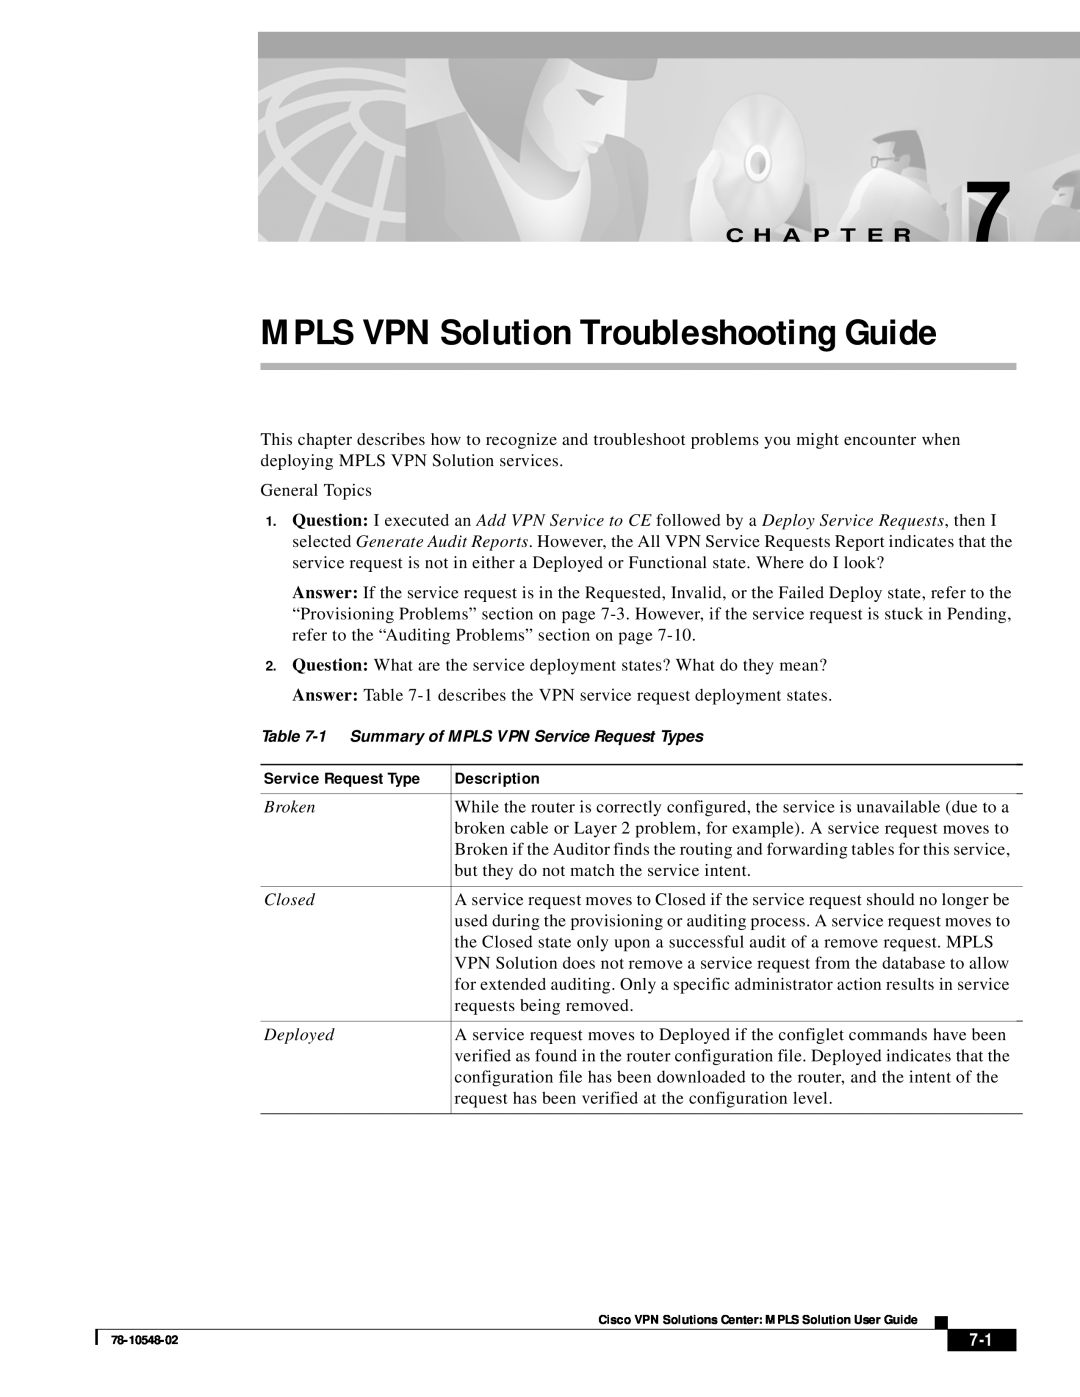 Cisco Systems 78-10548-02 manual Service Request Type, Description, MPLS VPN Solution Troubleshooting Guide, C H A P T E R 